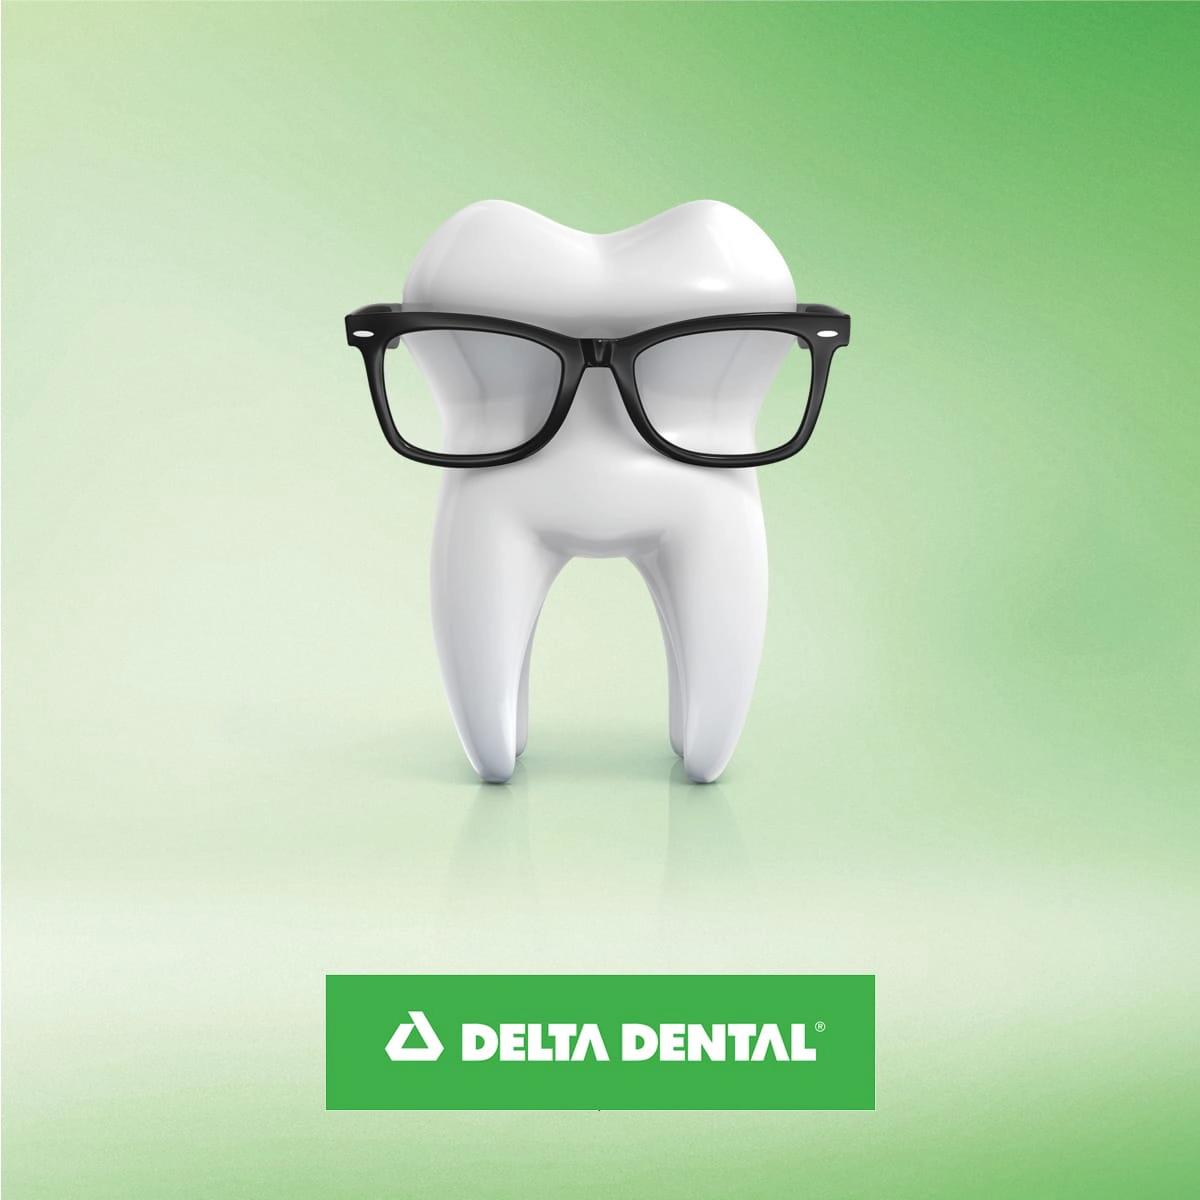 We Accept Delta Dental PPO